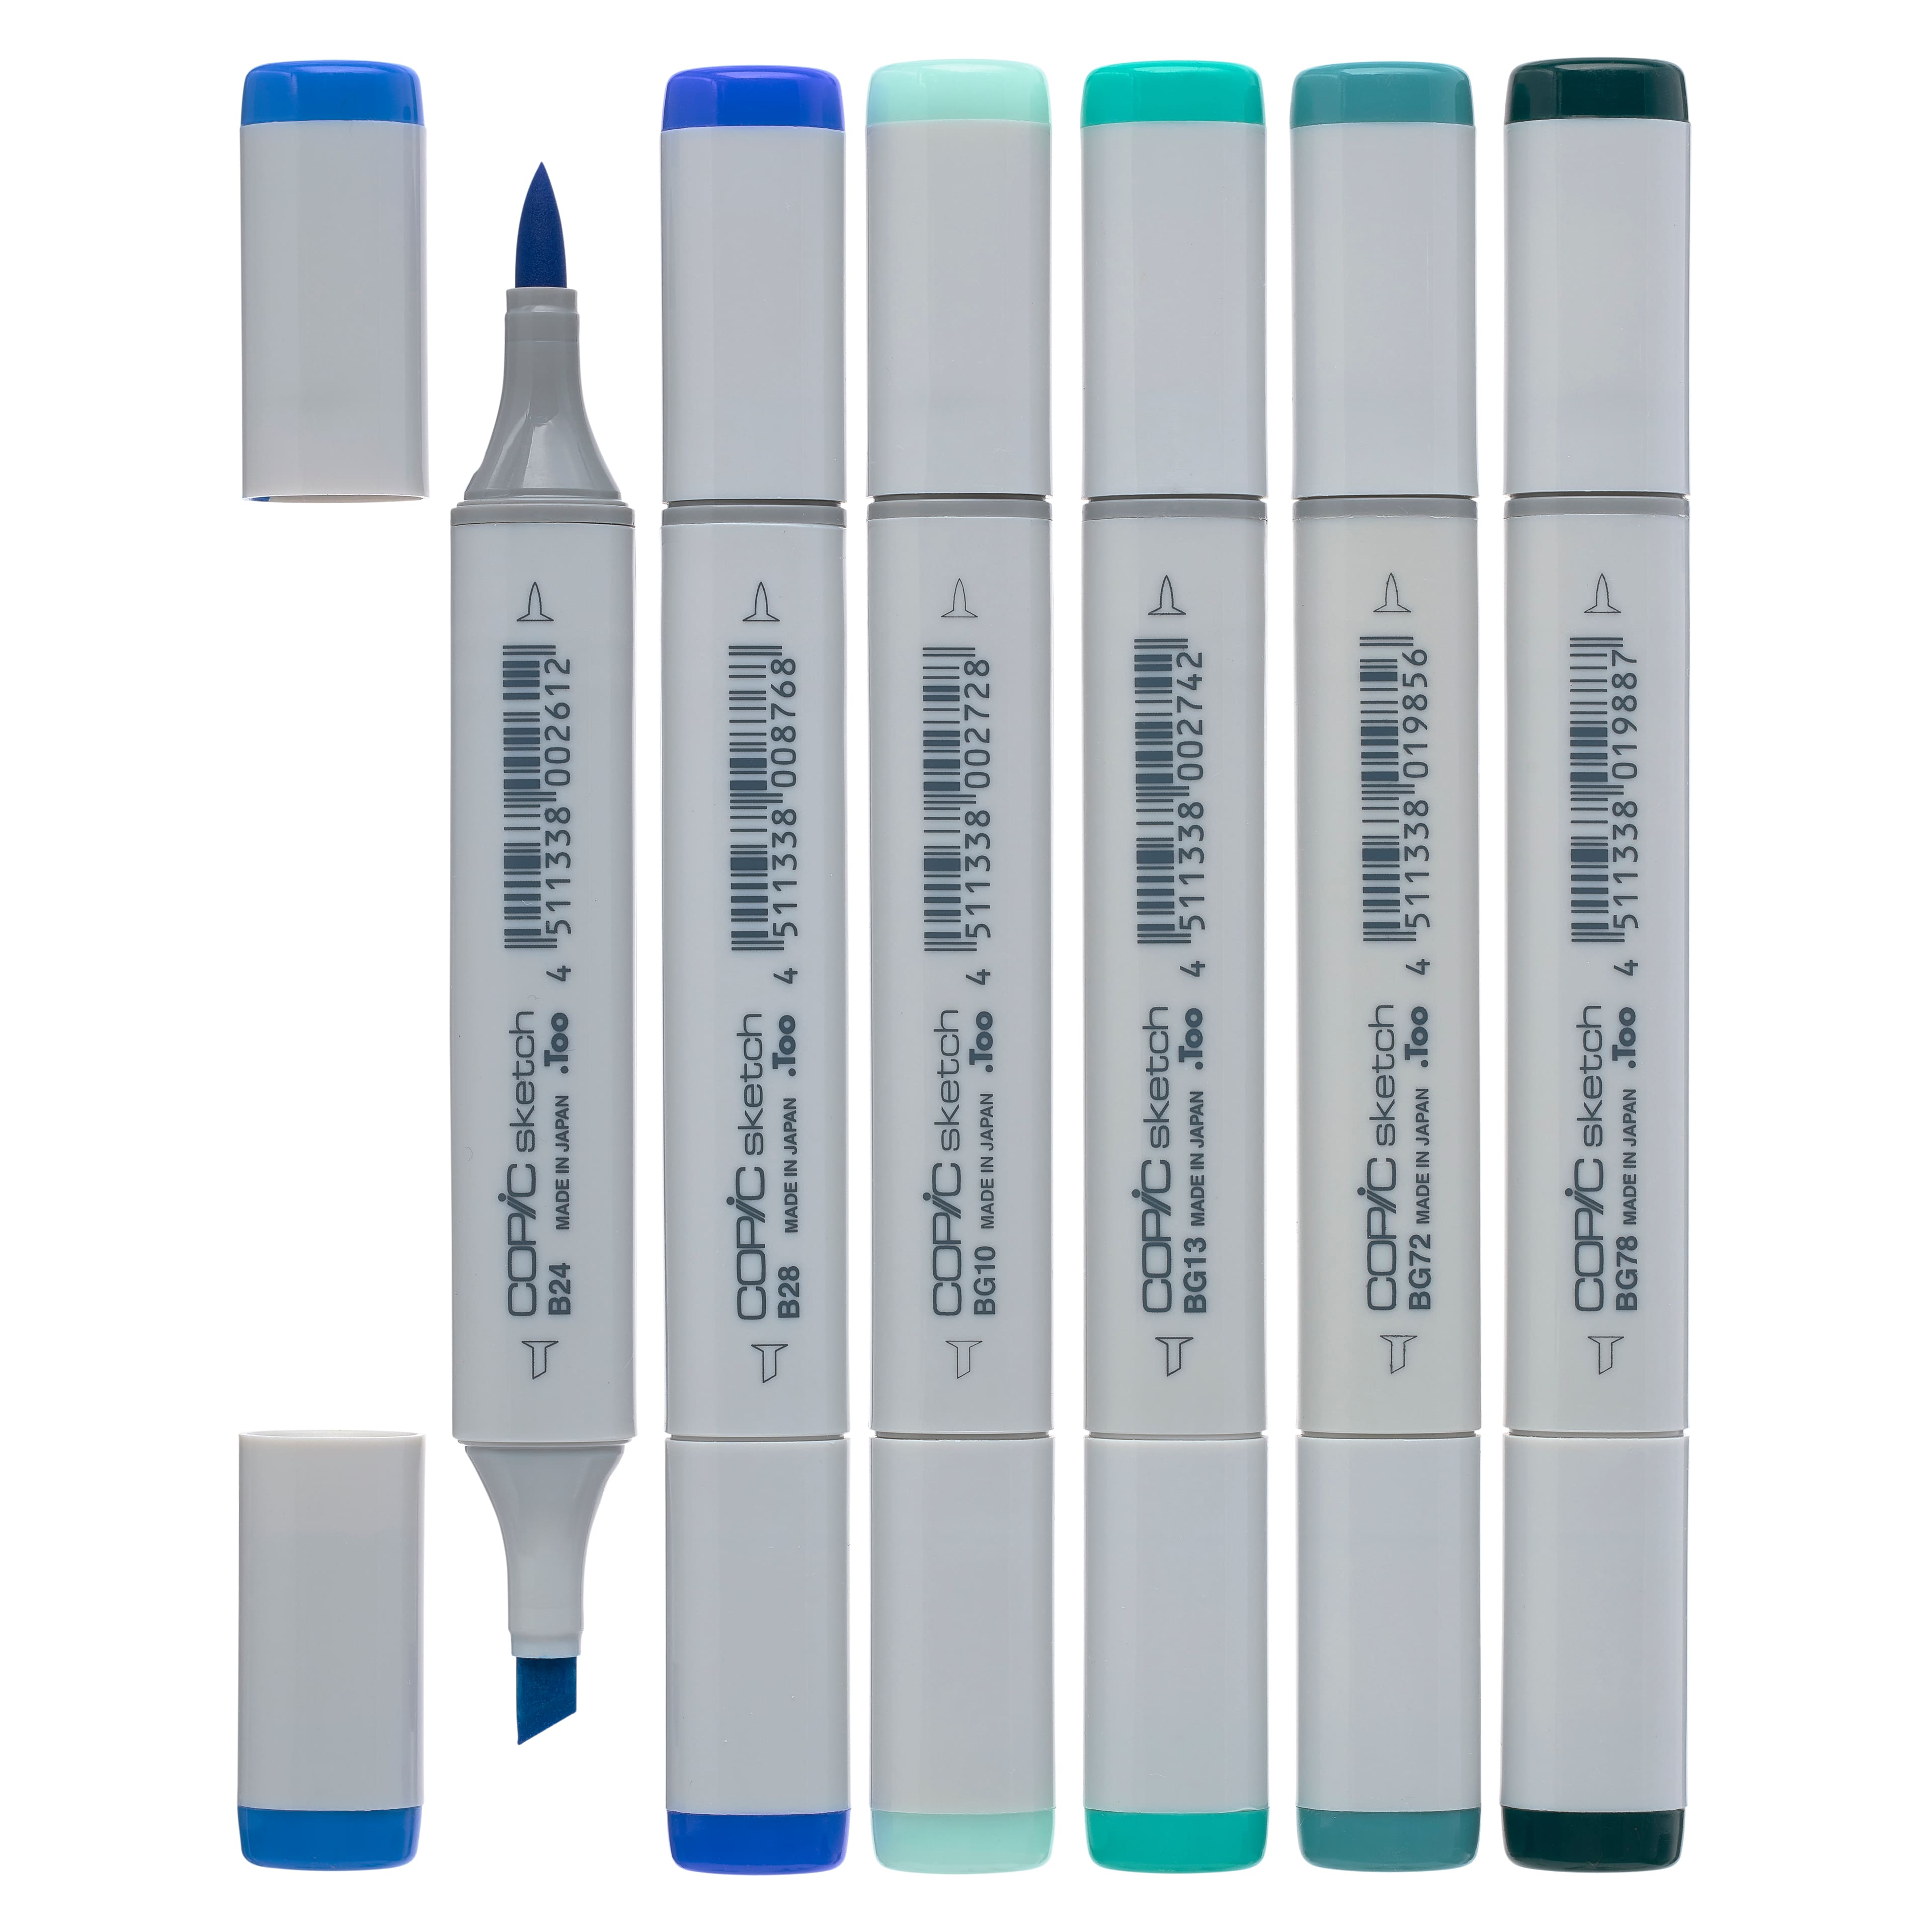 Copic Sketch Marker Set - Sea & Sky Colors, Set of 6